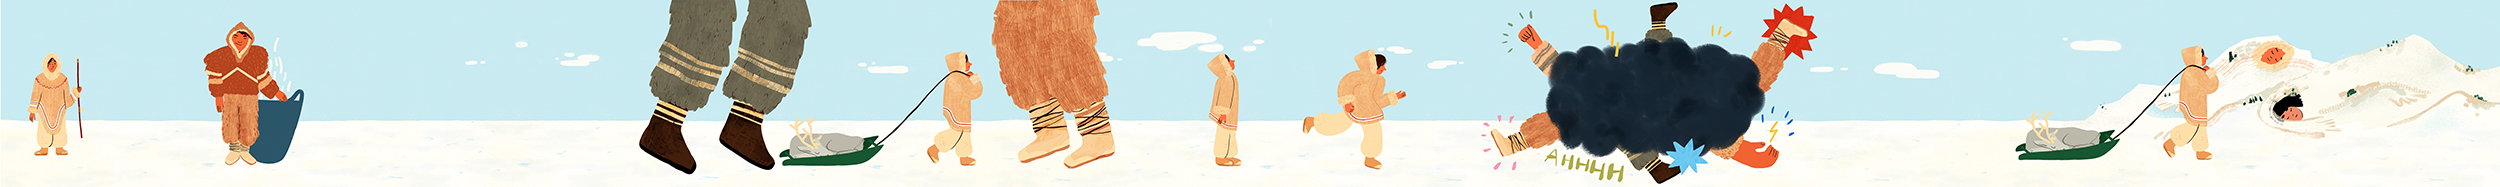 animation-background-landscape-inuit-alaska-hunter-giants-mountains-ice-sledge-tale-traditional-storytelling-illustration-violeta-noy